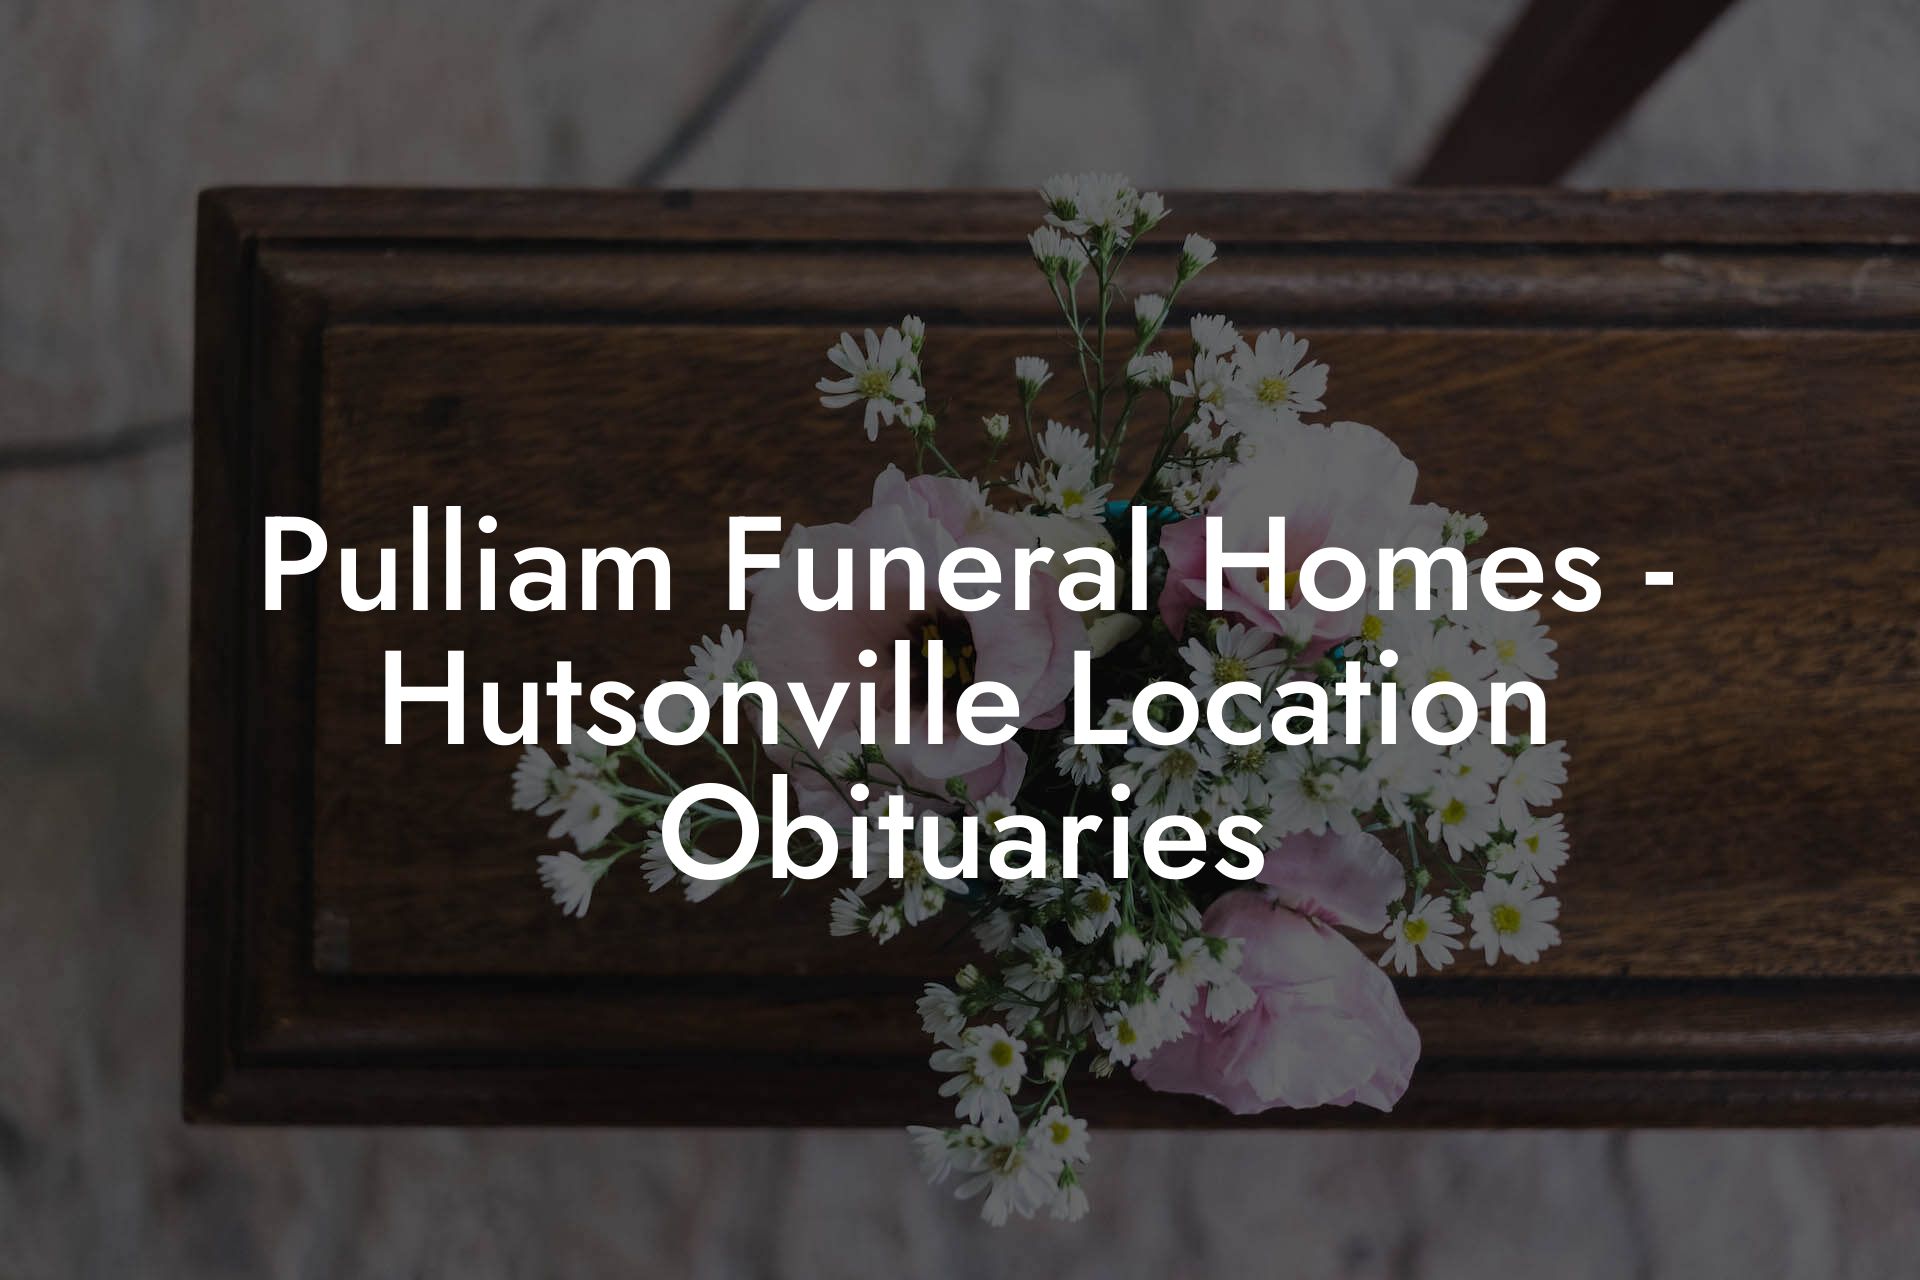 Pulliam Funeral Homes - Hutsonville Location Obituaries